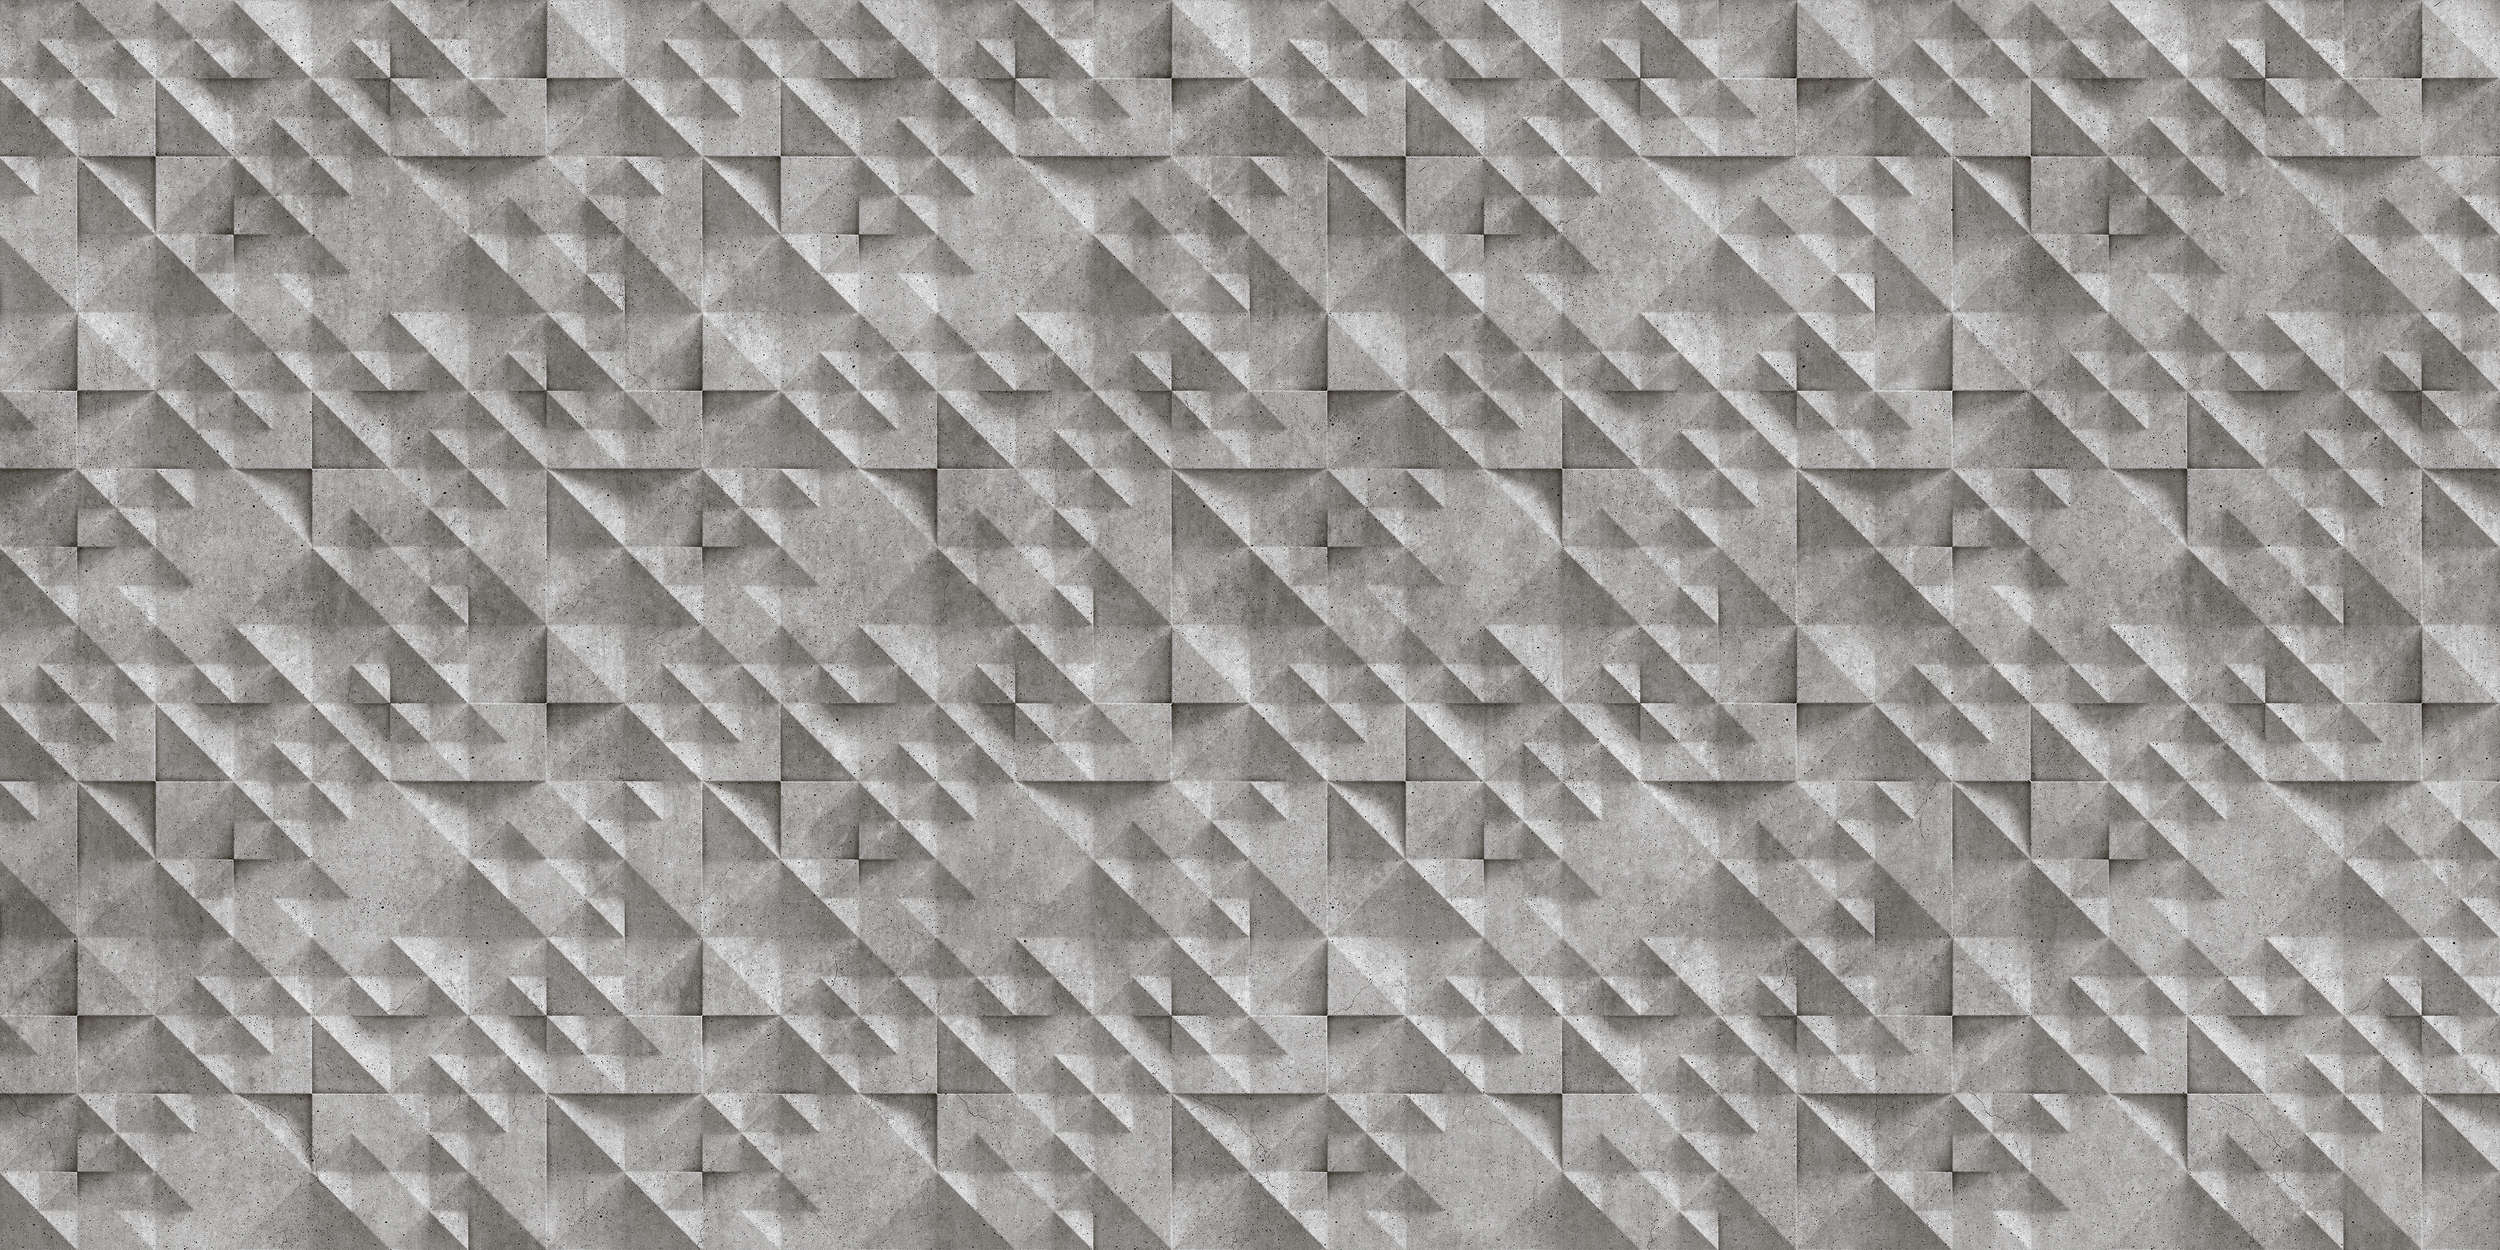             Concrete 2 - Cool 3D Concrete Rough Wallpaper - Grijs, Zwart | Textured Non-woven
        